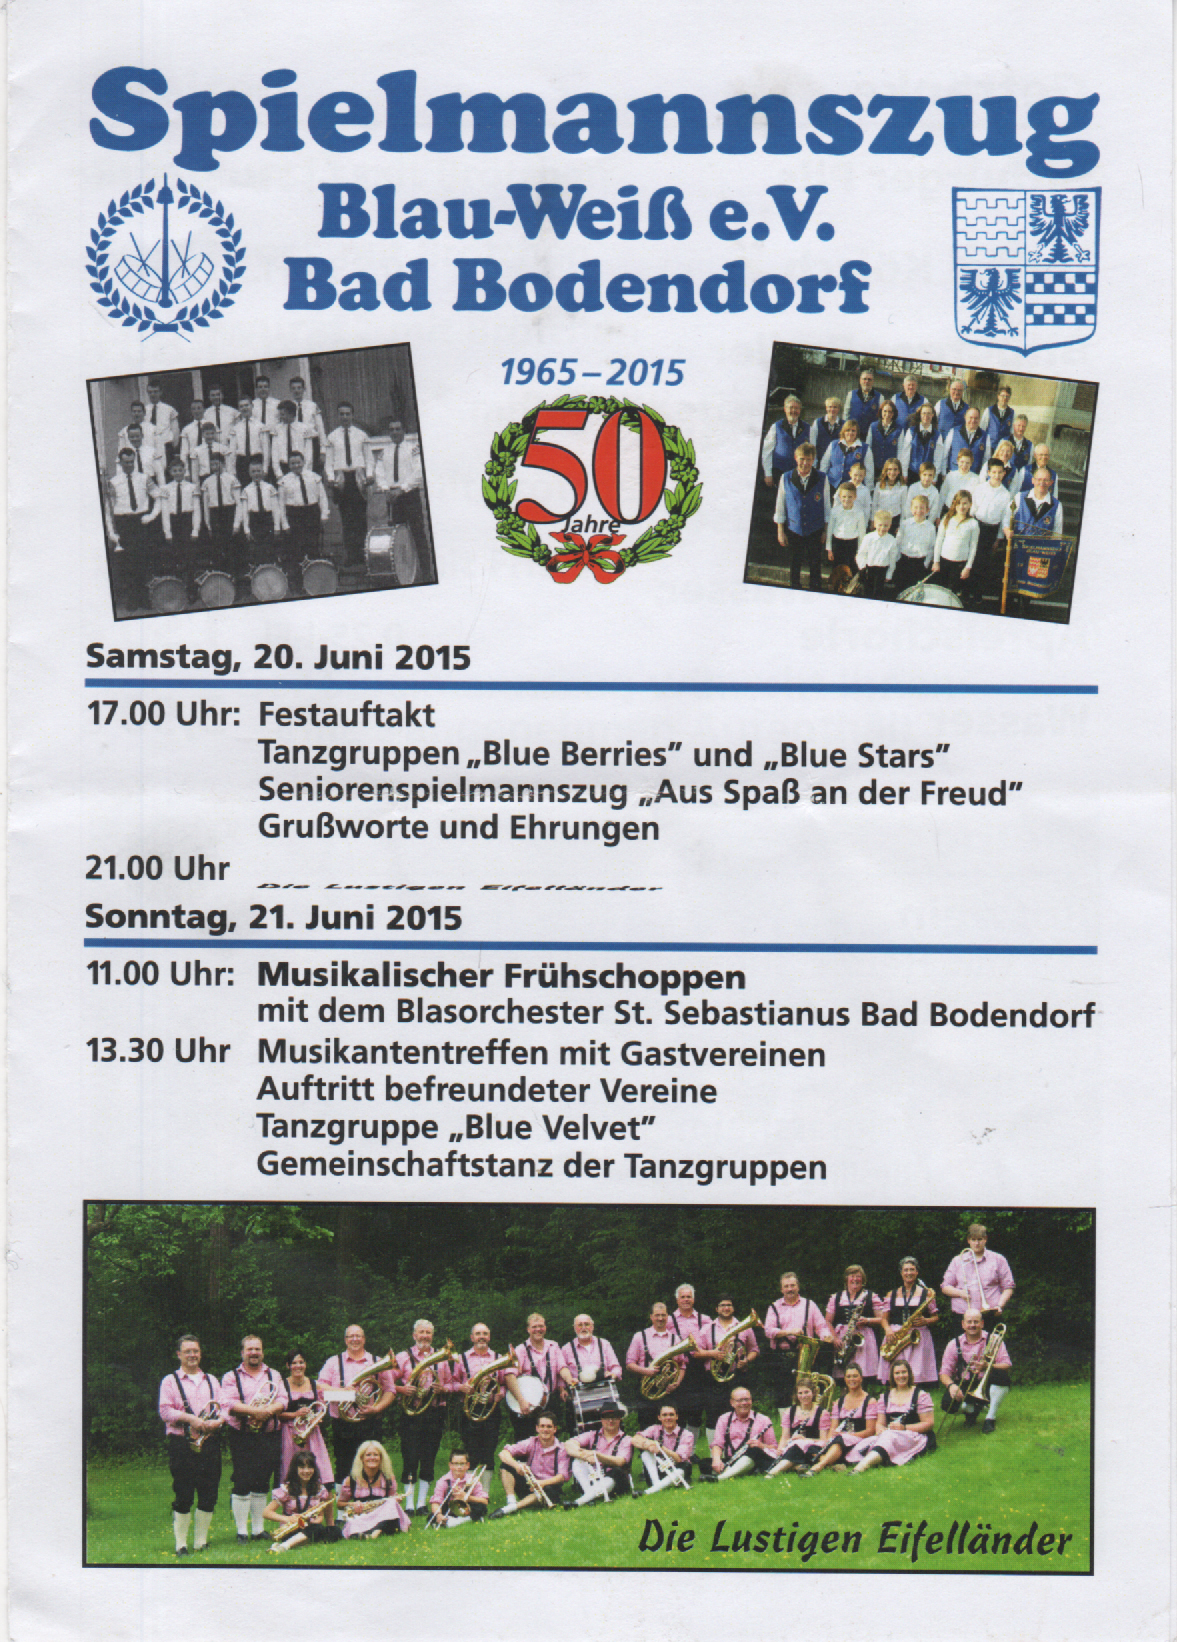 Festprogramm des Spielmannszugs Blau-Weiß Bad Bodendorf zur 50 Jahrfeuer (Spielmannszug Blau-Weiß Bad Bodendorf e. V. CC BY-NC-SA)